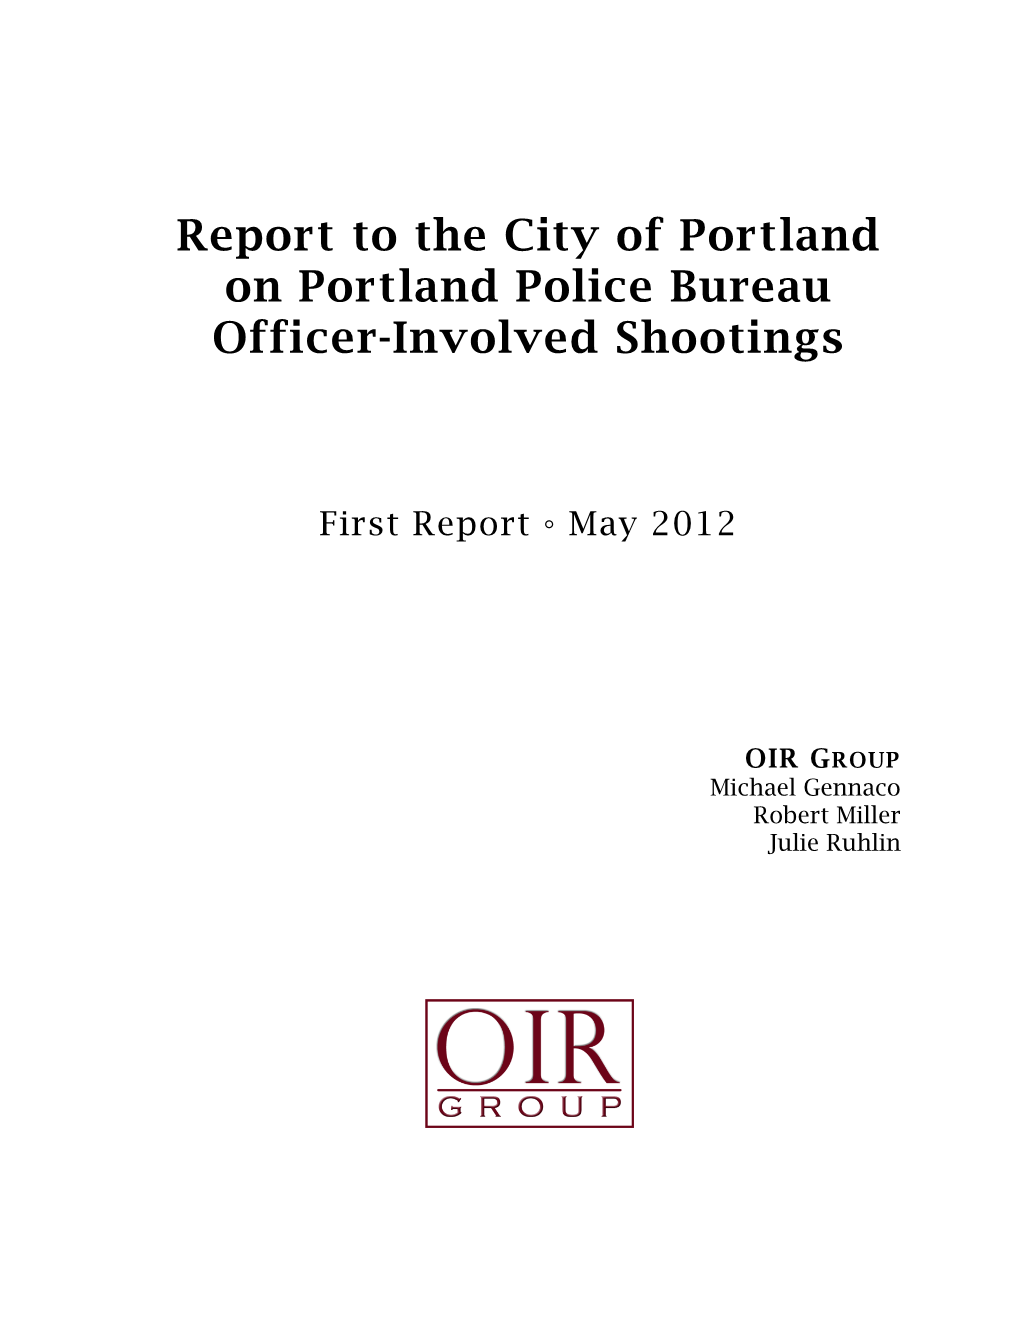 (OR) on Portland Police Bureau Officer-Involved Shootings